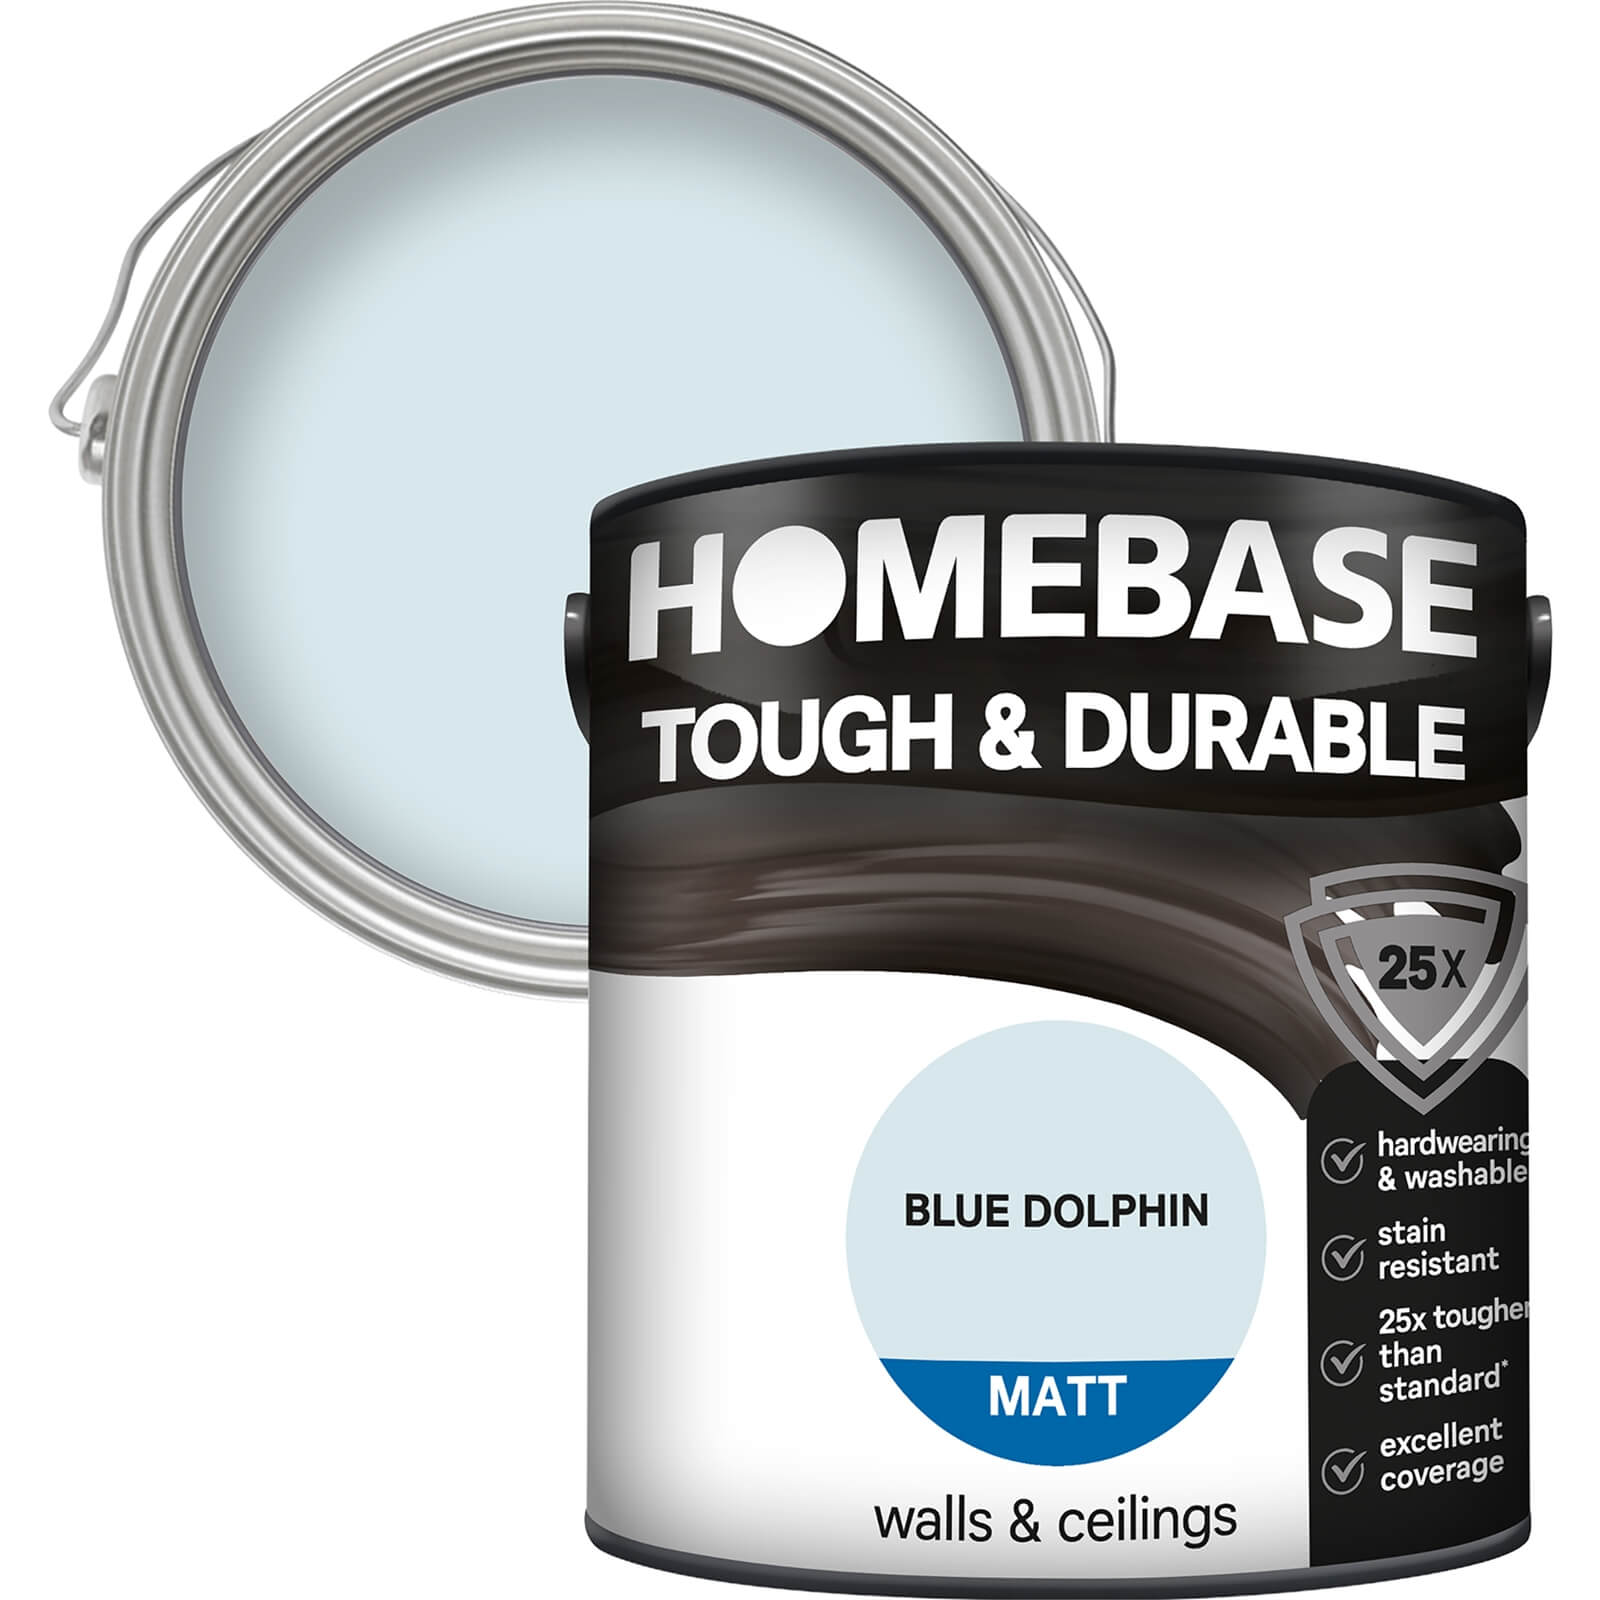 Homebase Tough & Durable Matt Emulsion Paint Blue Dolphin - 2.5L